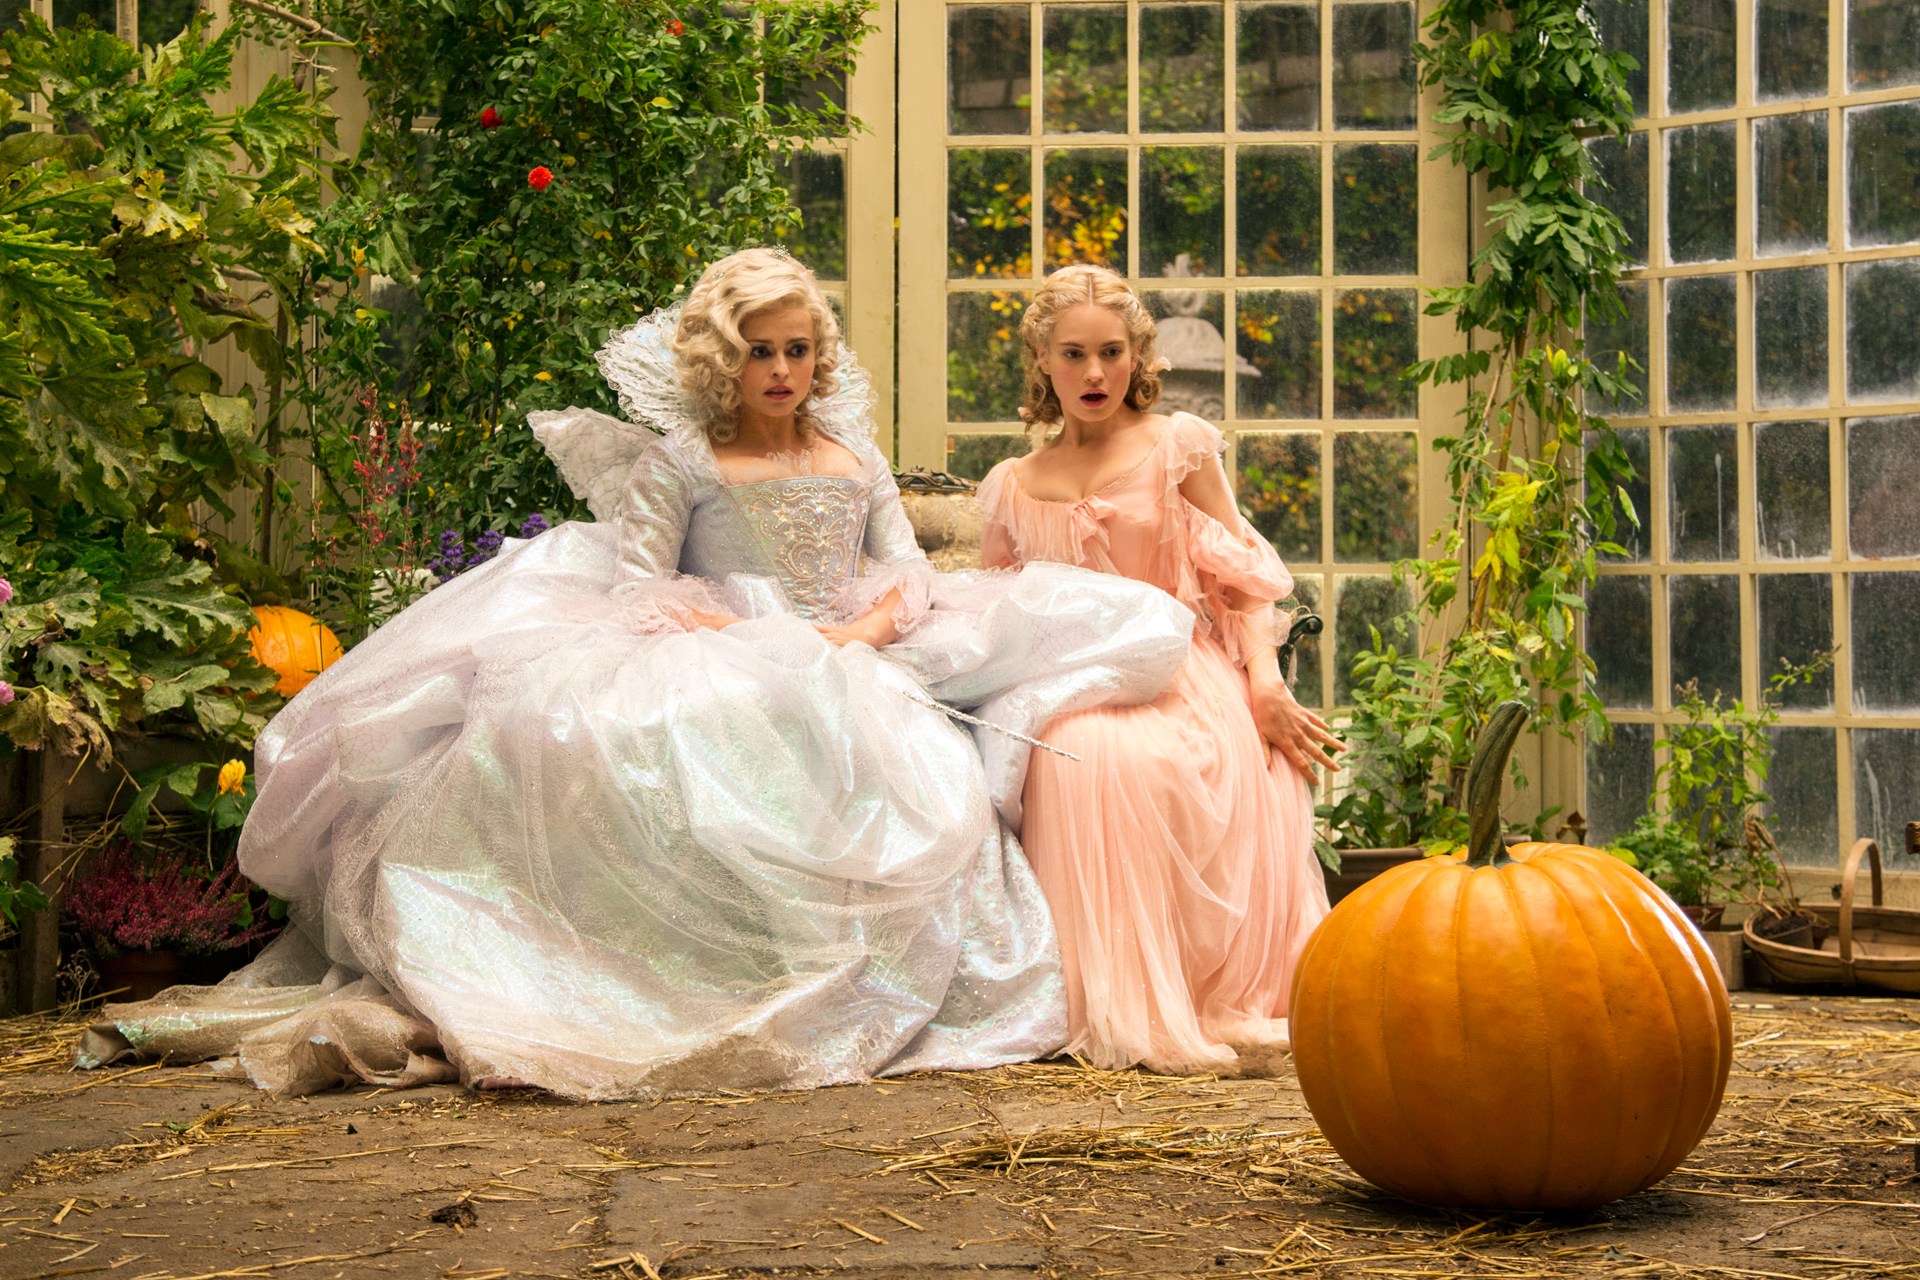 Cinderella Wedding Dress Lily James: Official Disney Cinderella Wedding  Dress for Brides